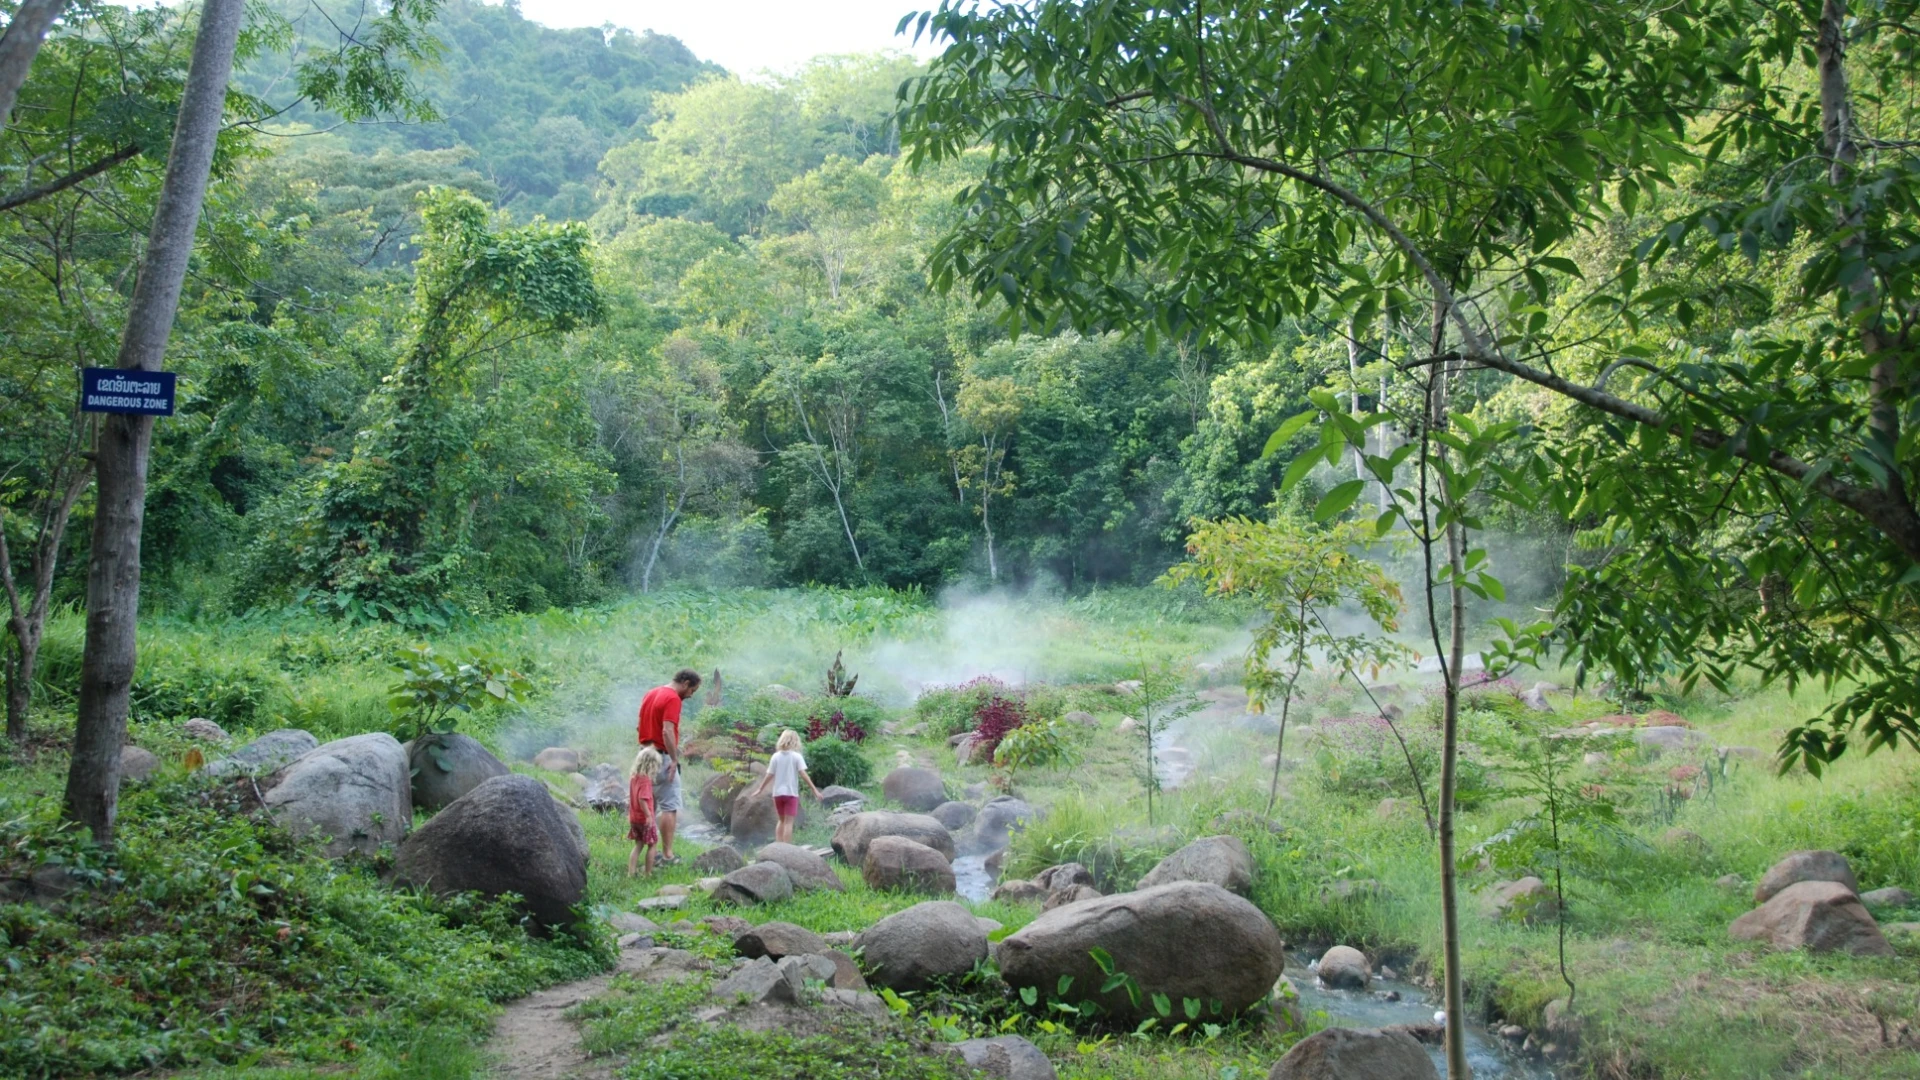 Viengthong Hot Springs